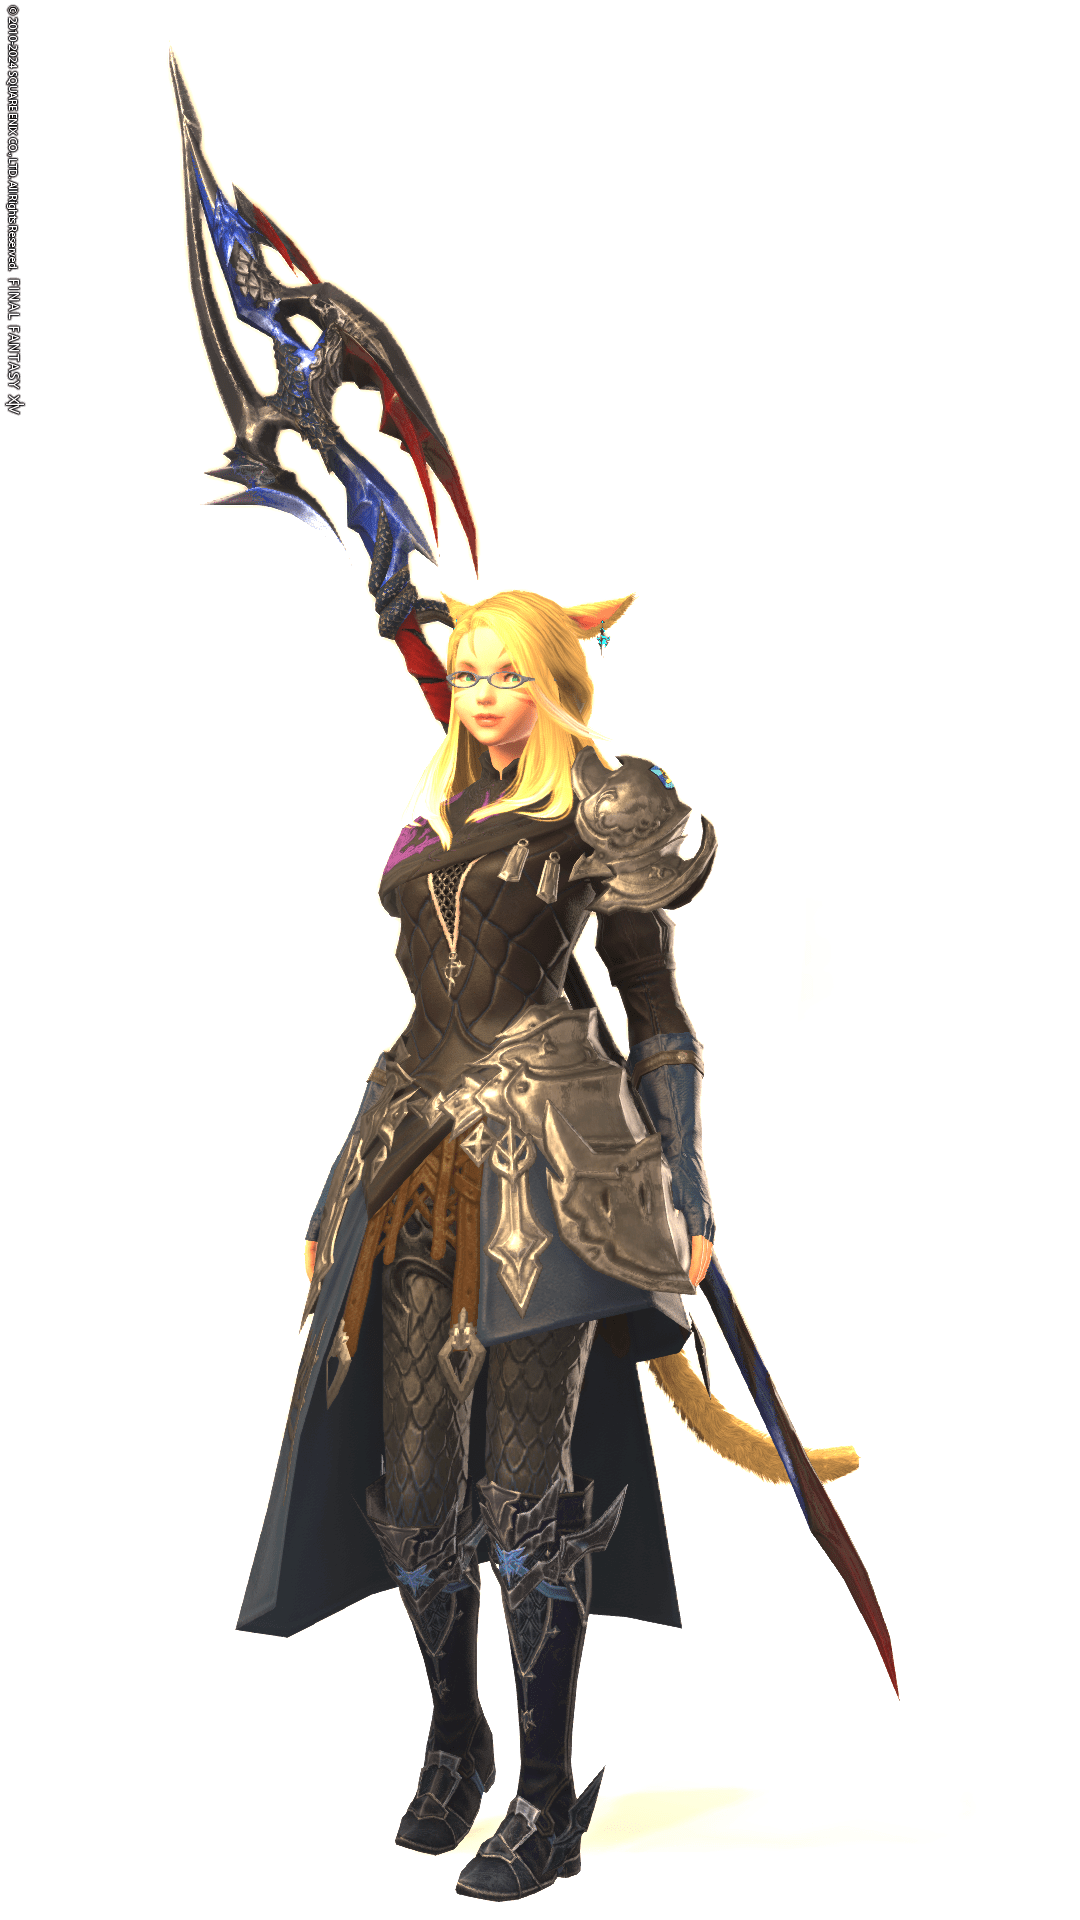 Aikirees in her new Dragoon attire